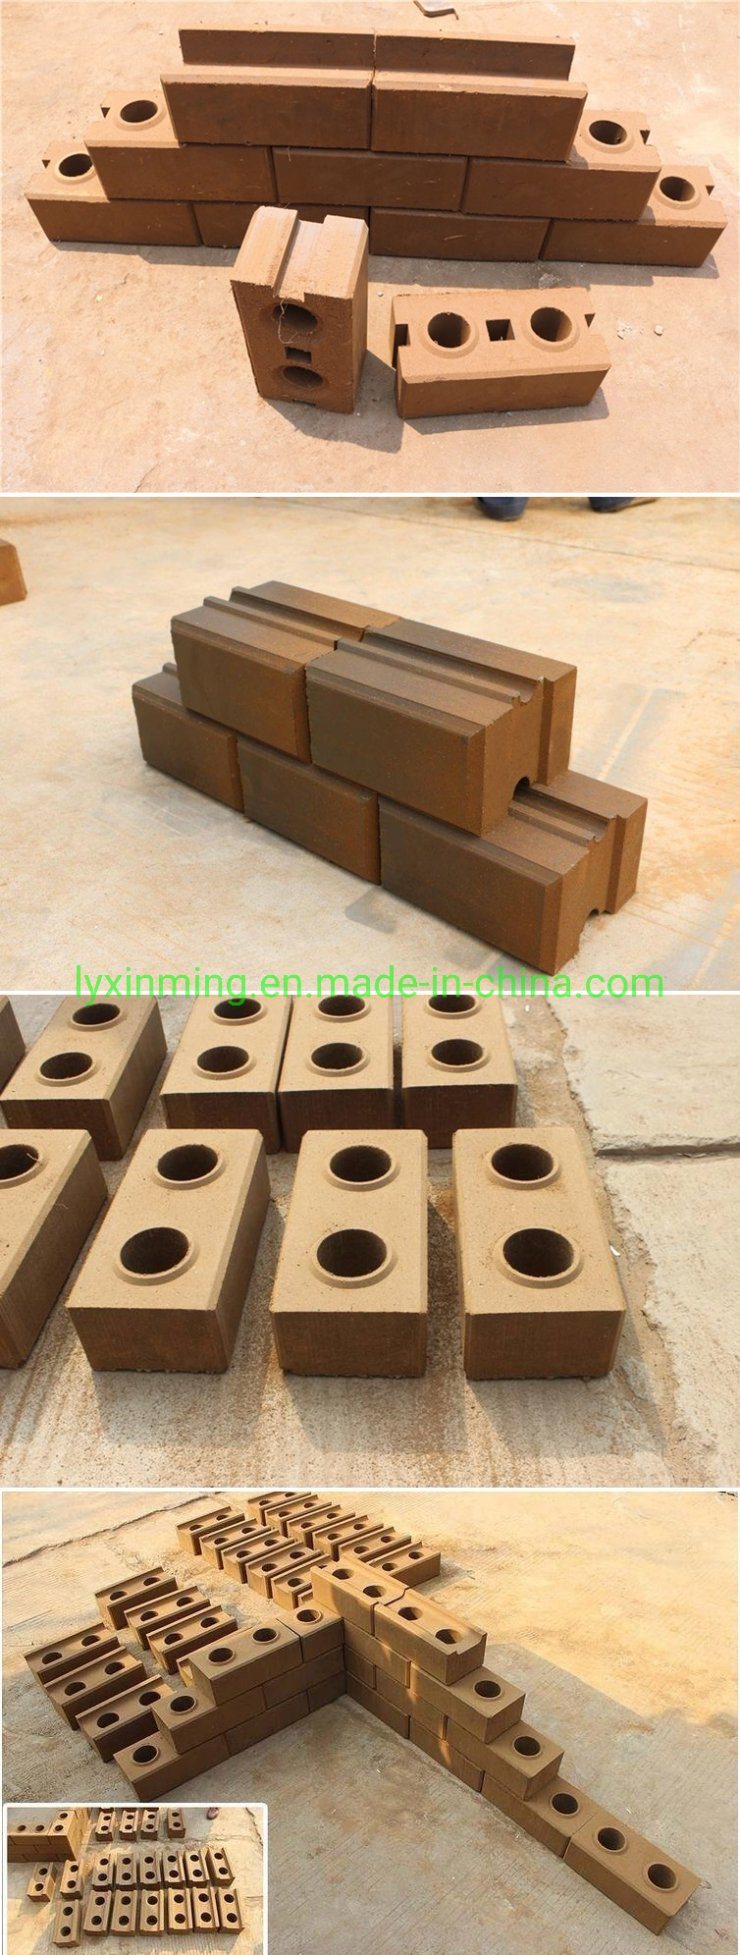 Semi-Automatic Xm2-25 Soil Hollow Block Making Machine Construction Interlocking Brick Machine with ISO Standard